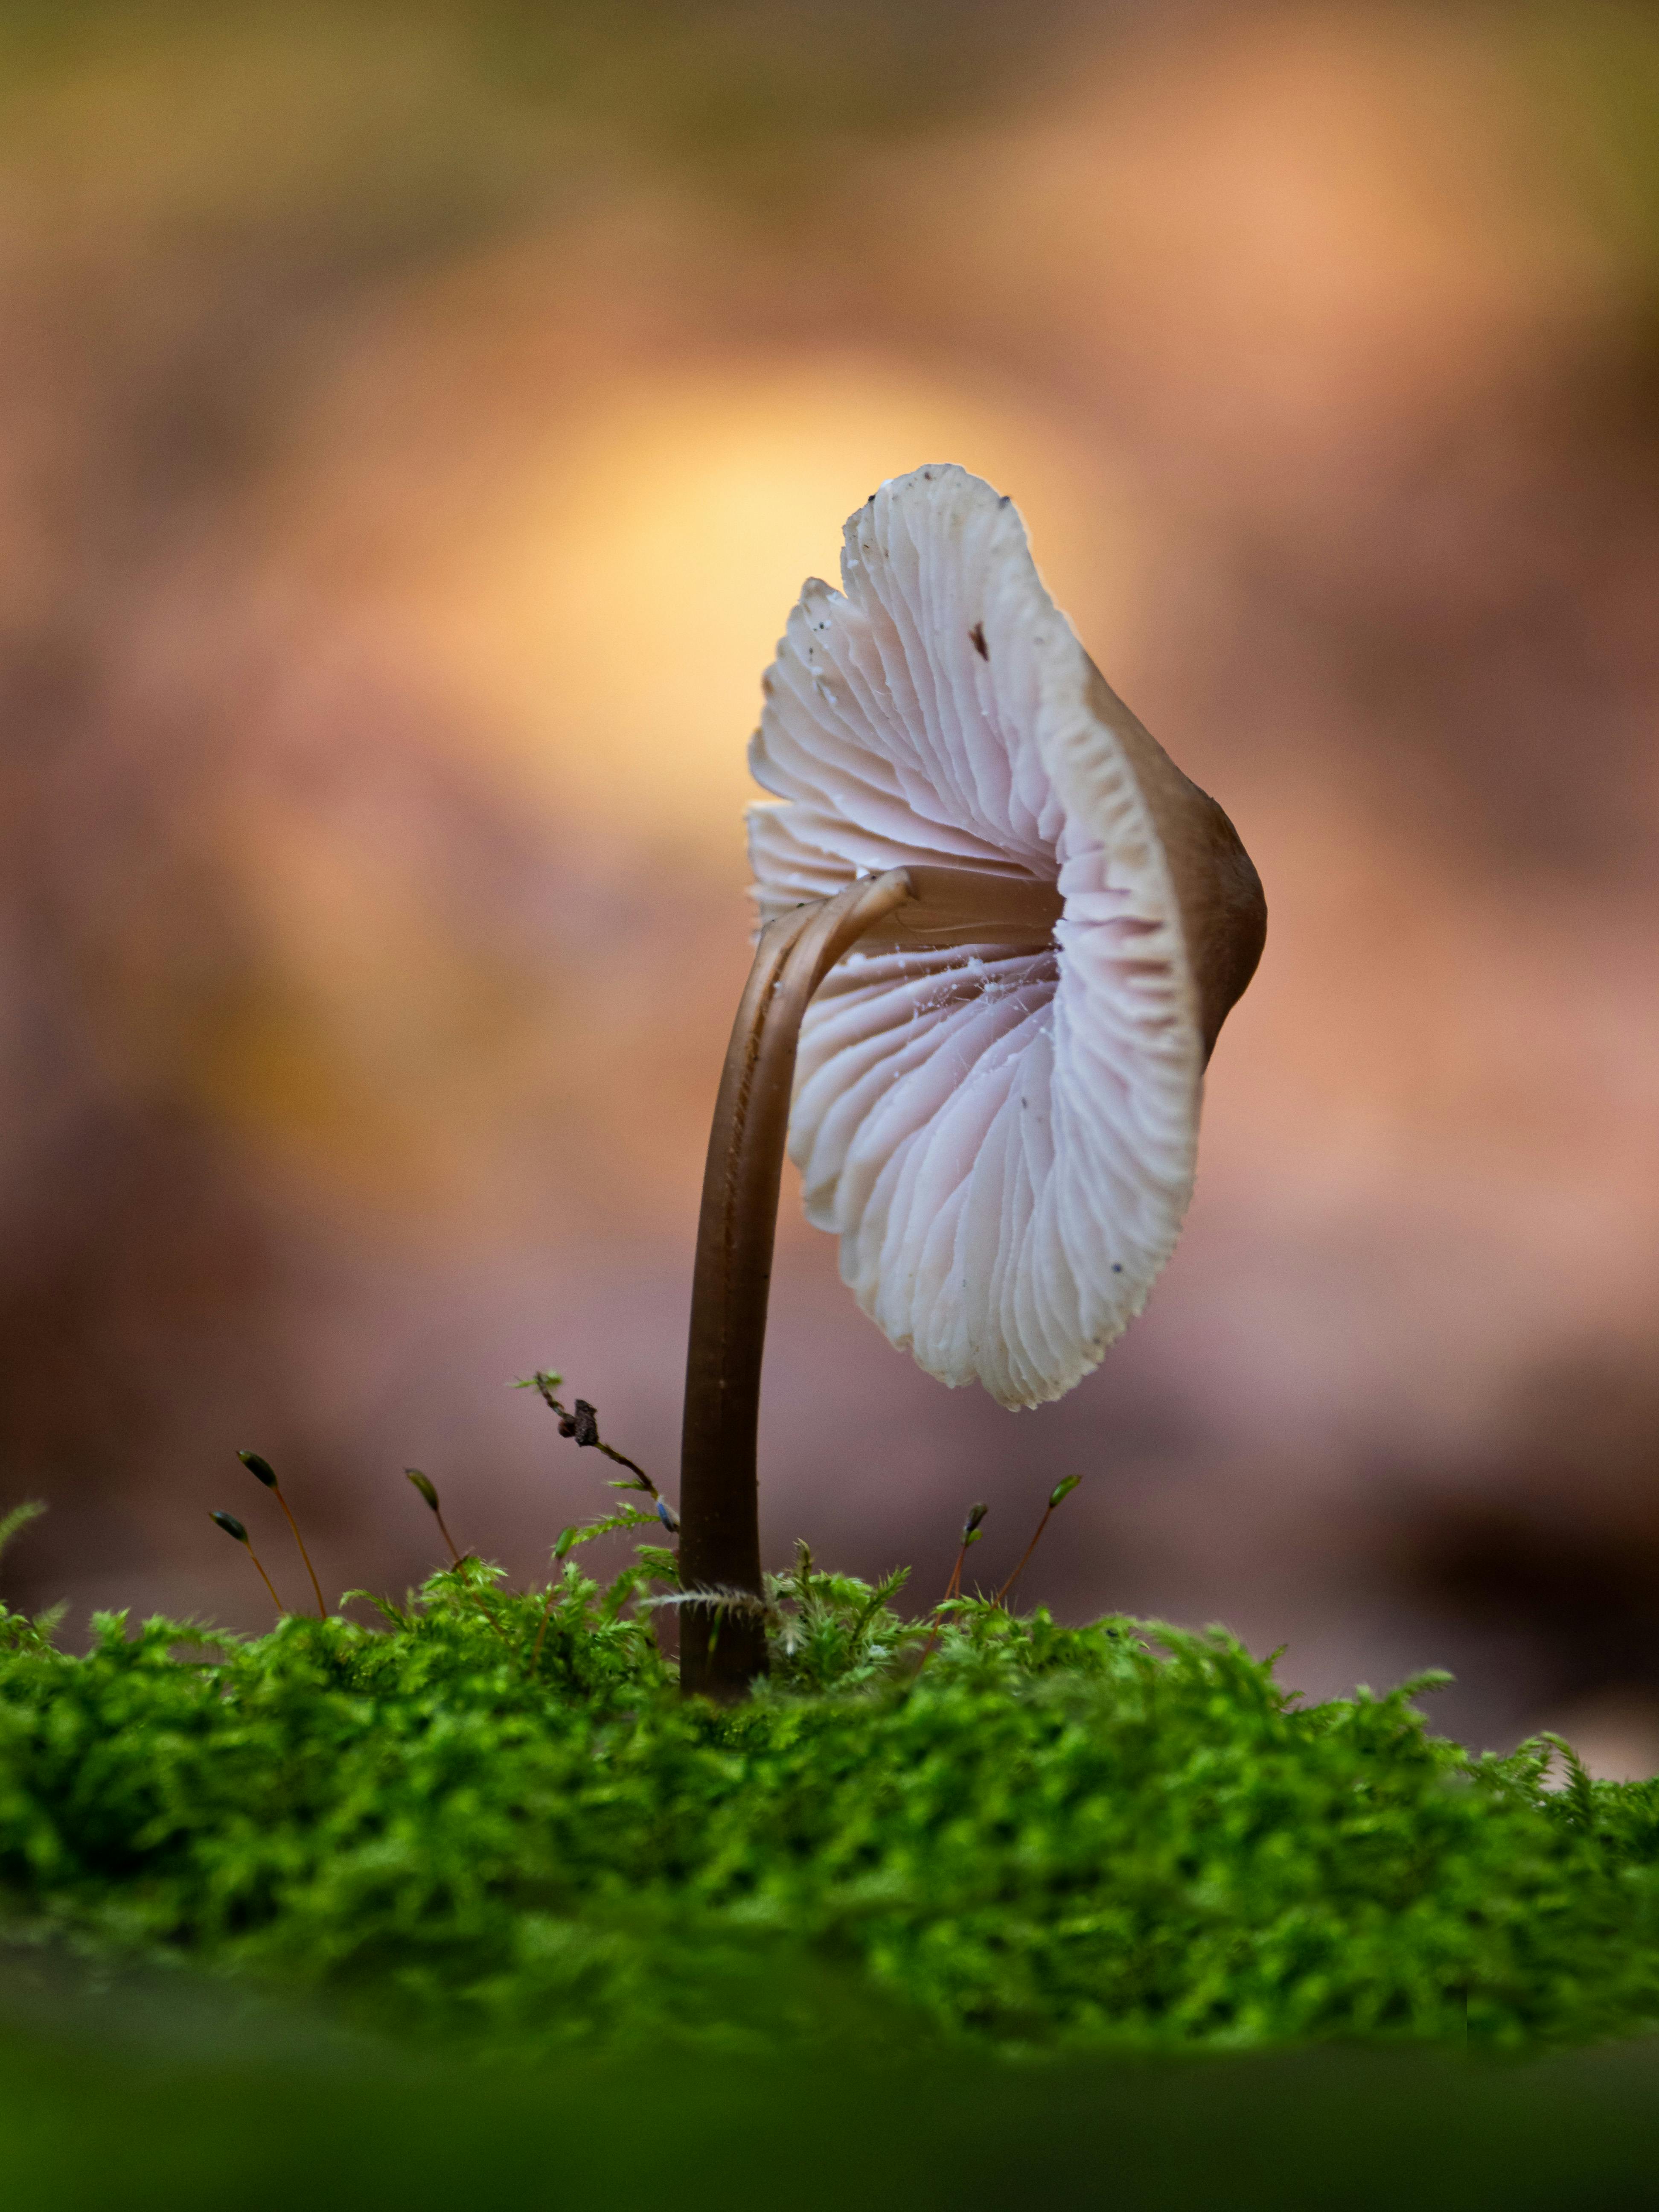 Mushroom in mossy ground